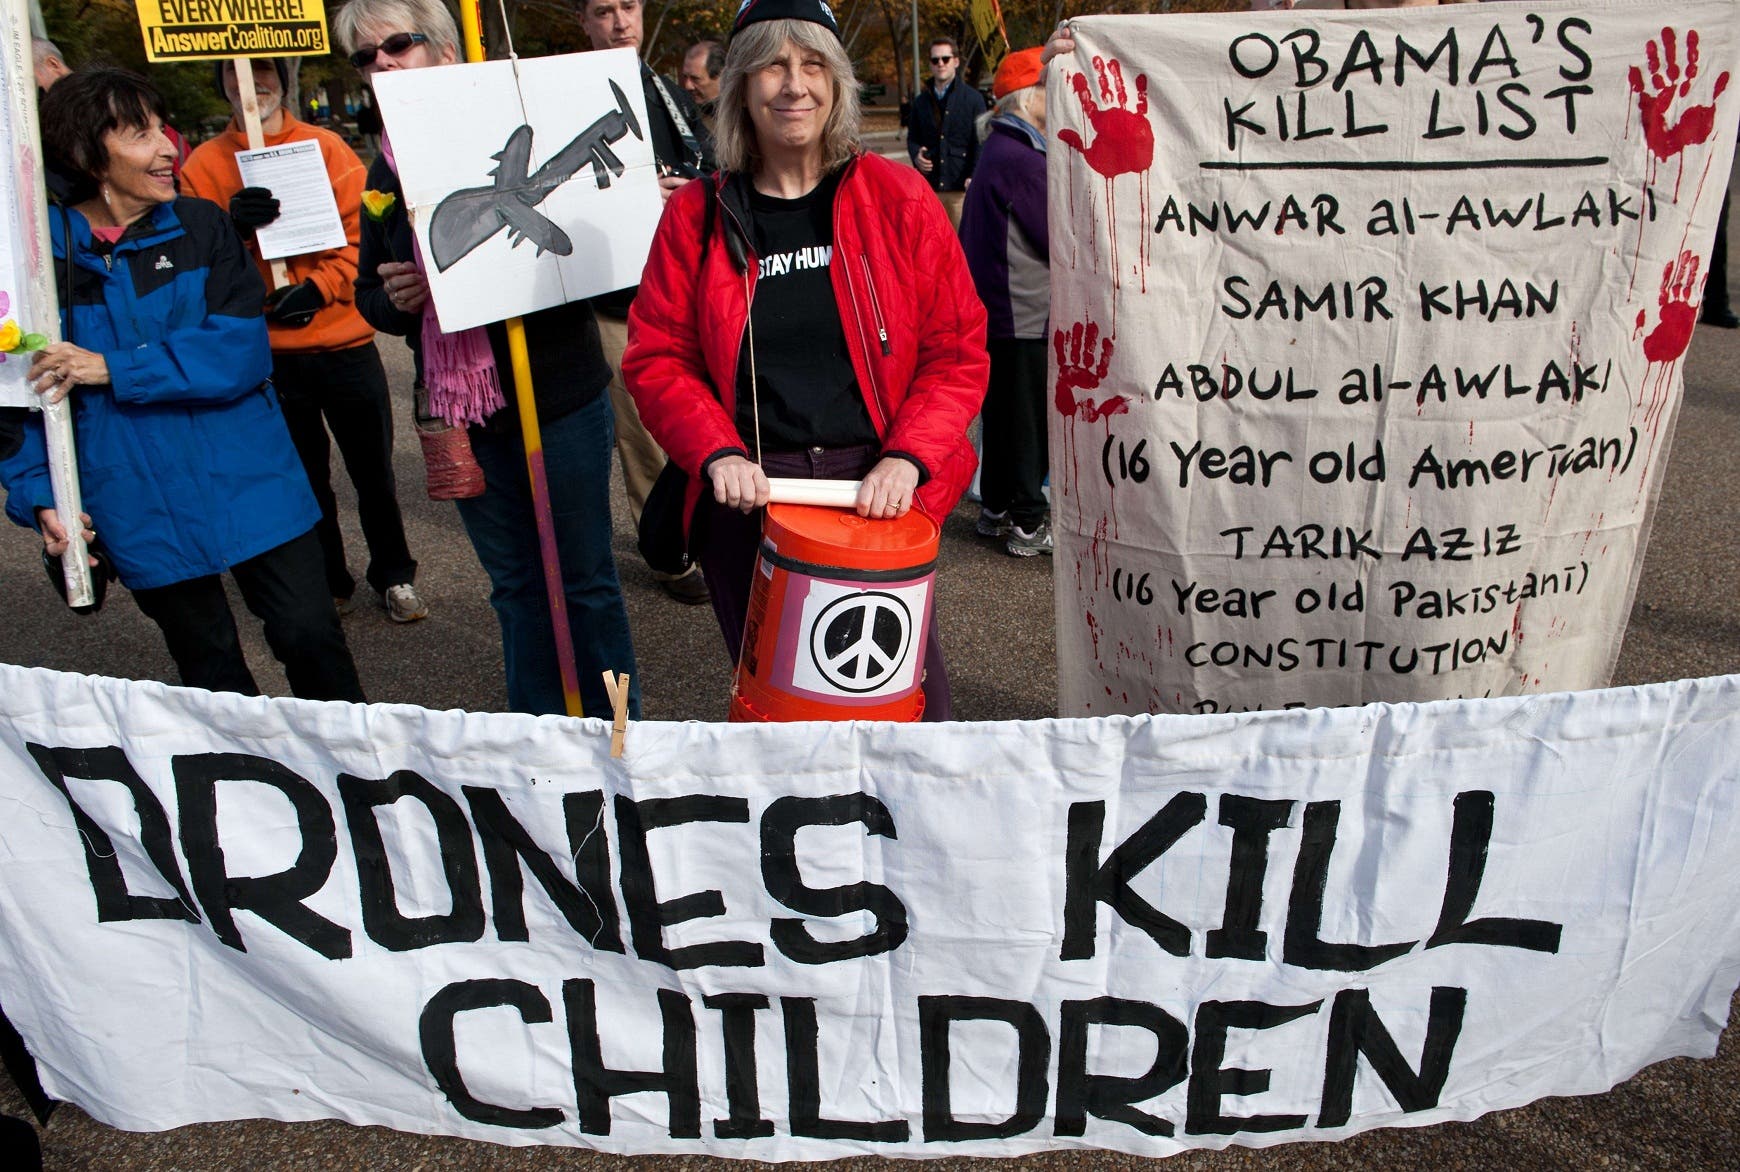 Rallying against U.S. ‘drone wars’